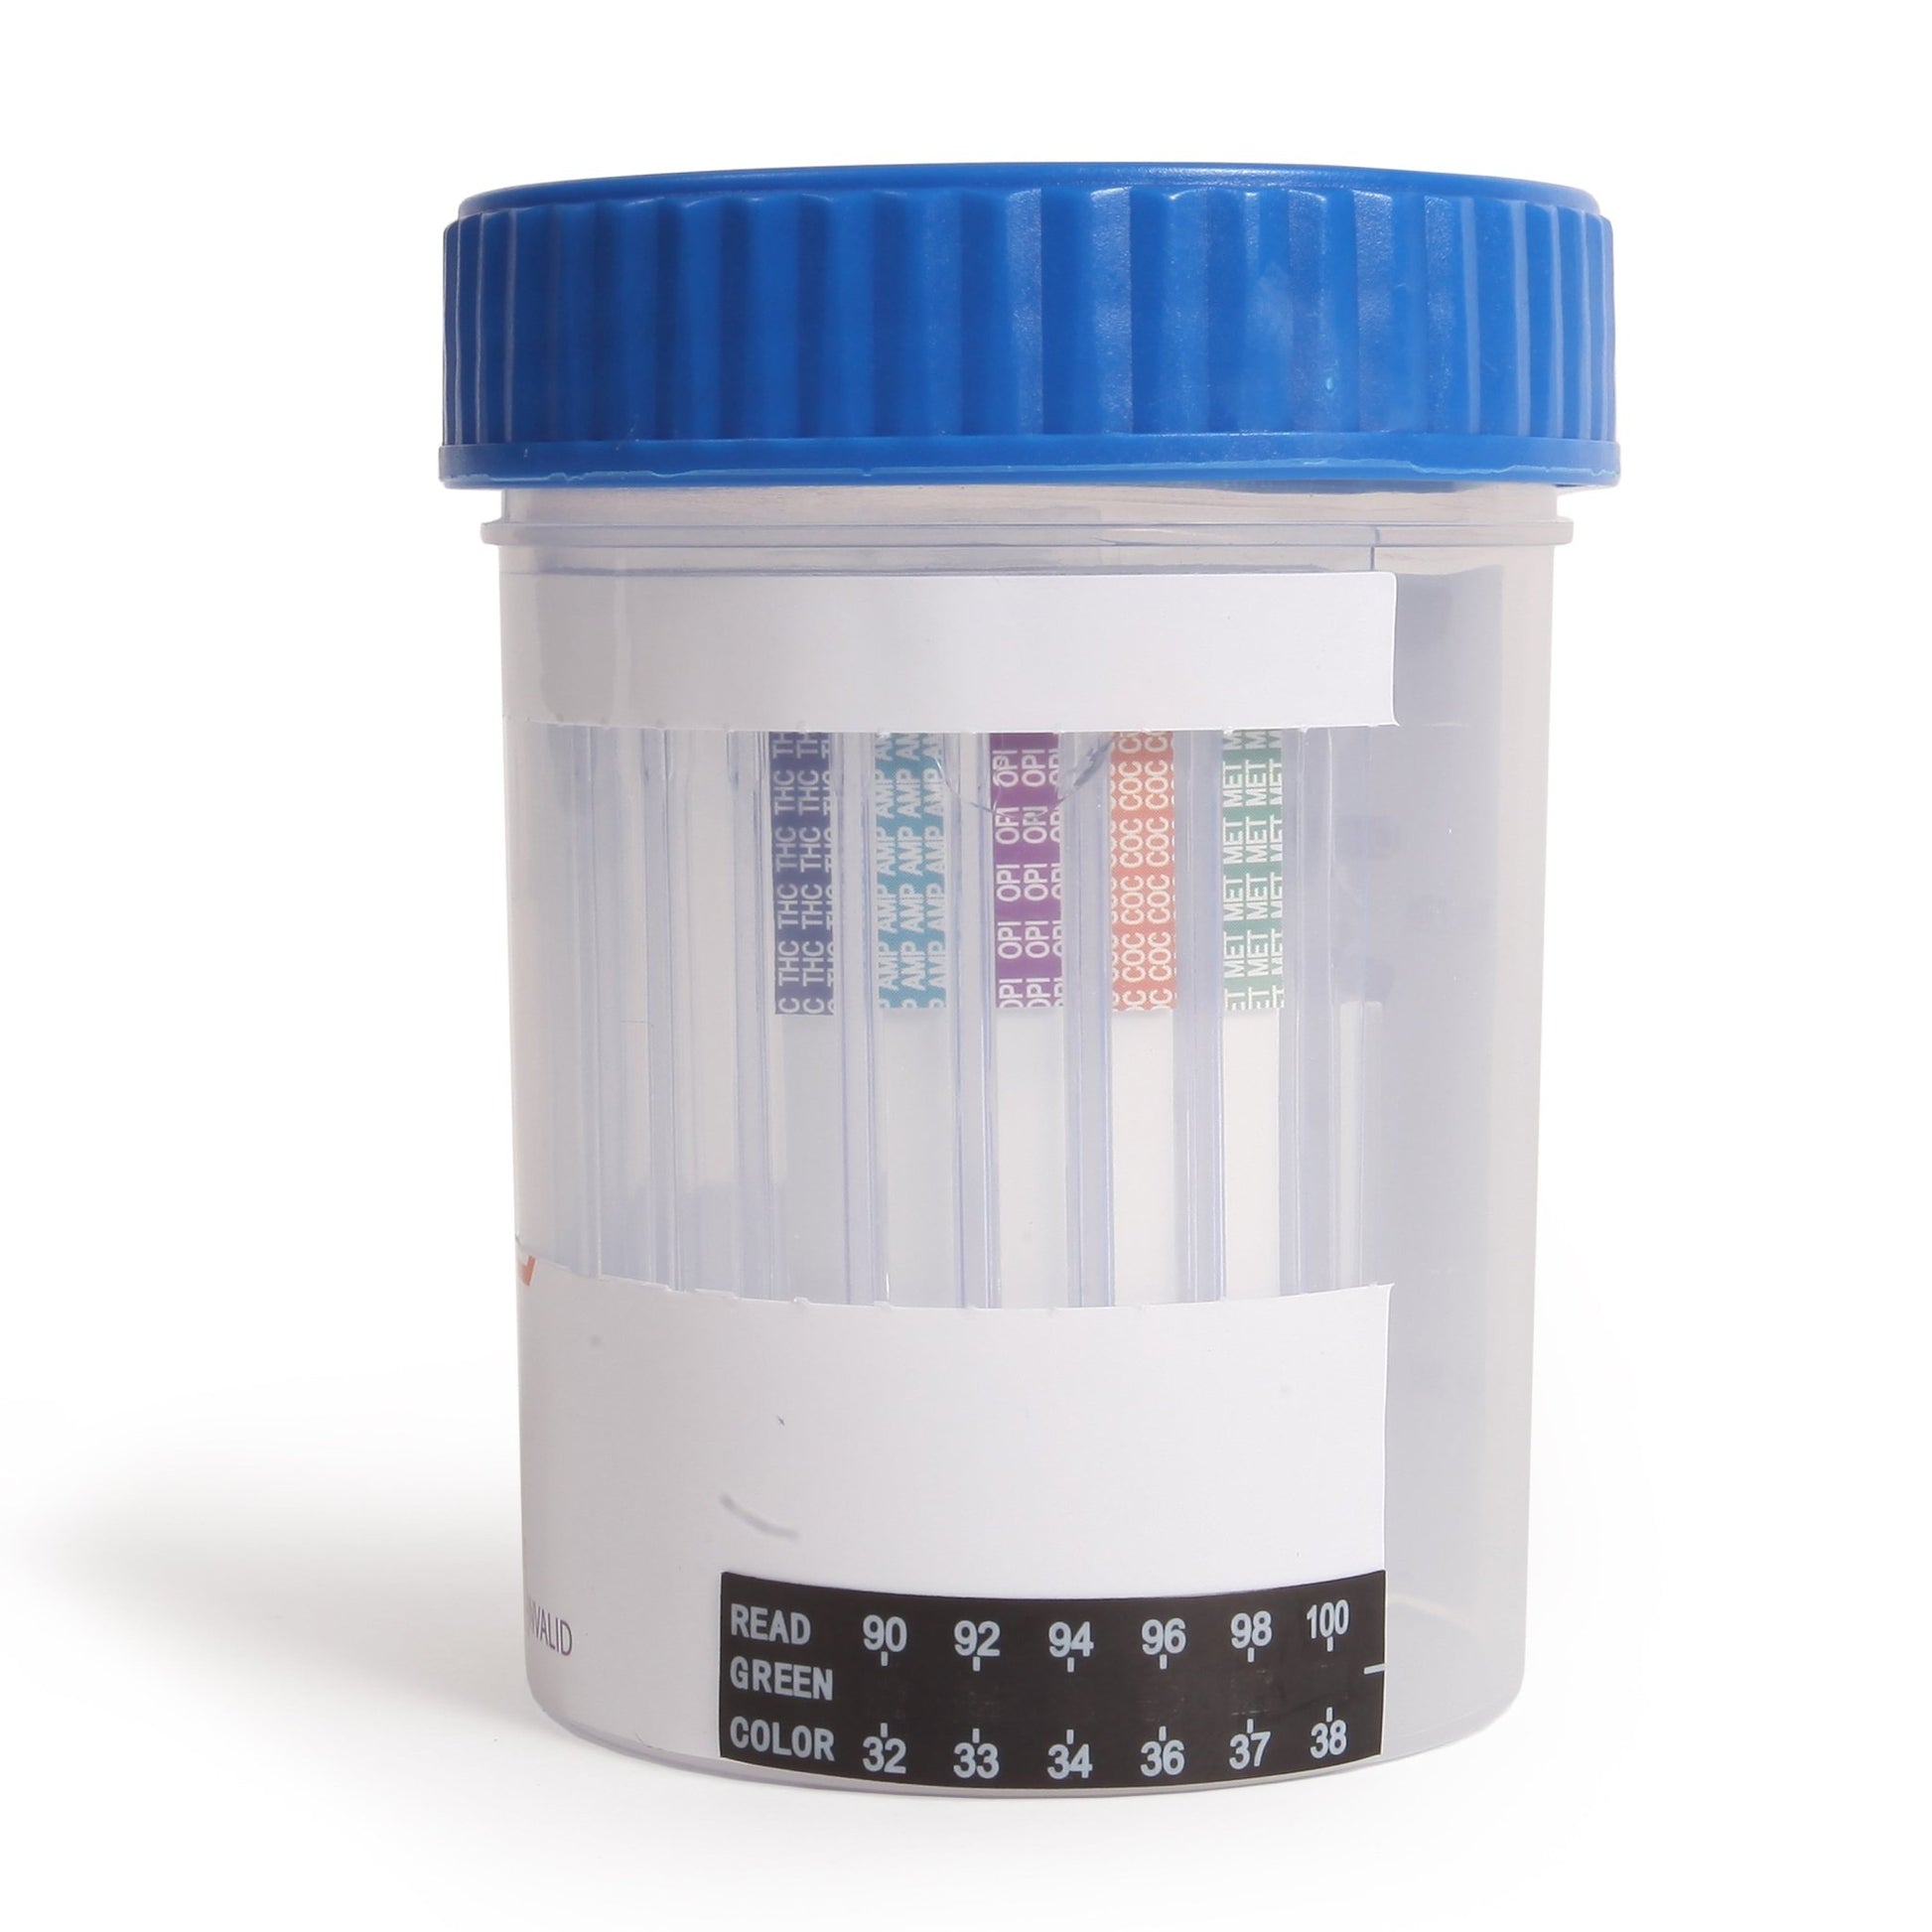 Healgen 6 Panel Drug Cup Tests - Verséa Diagnostics